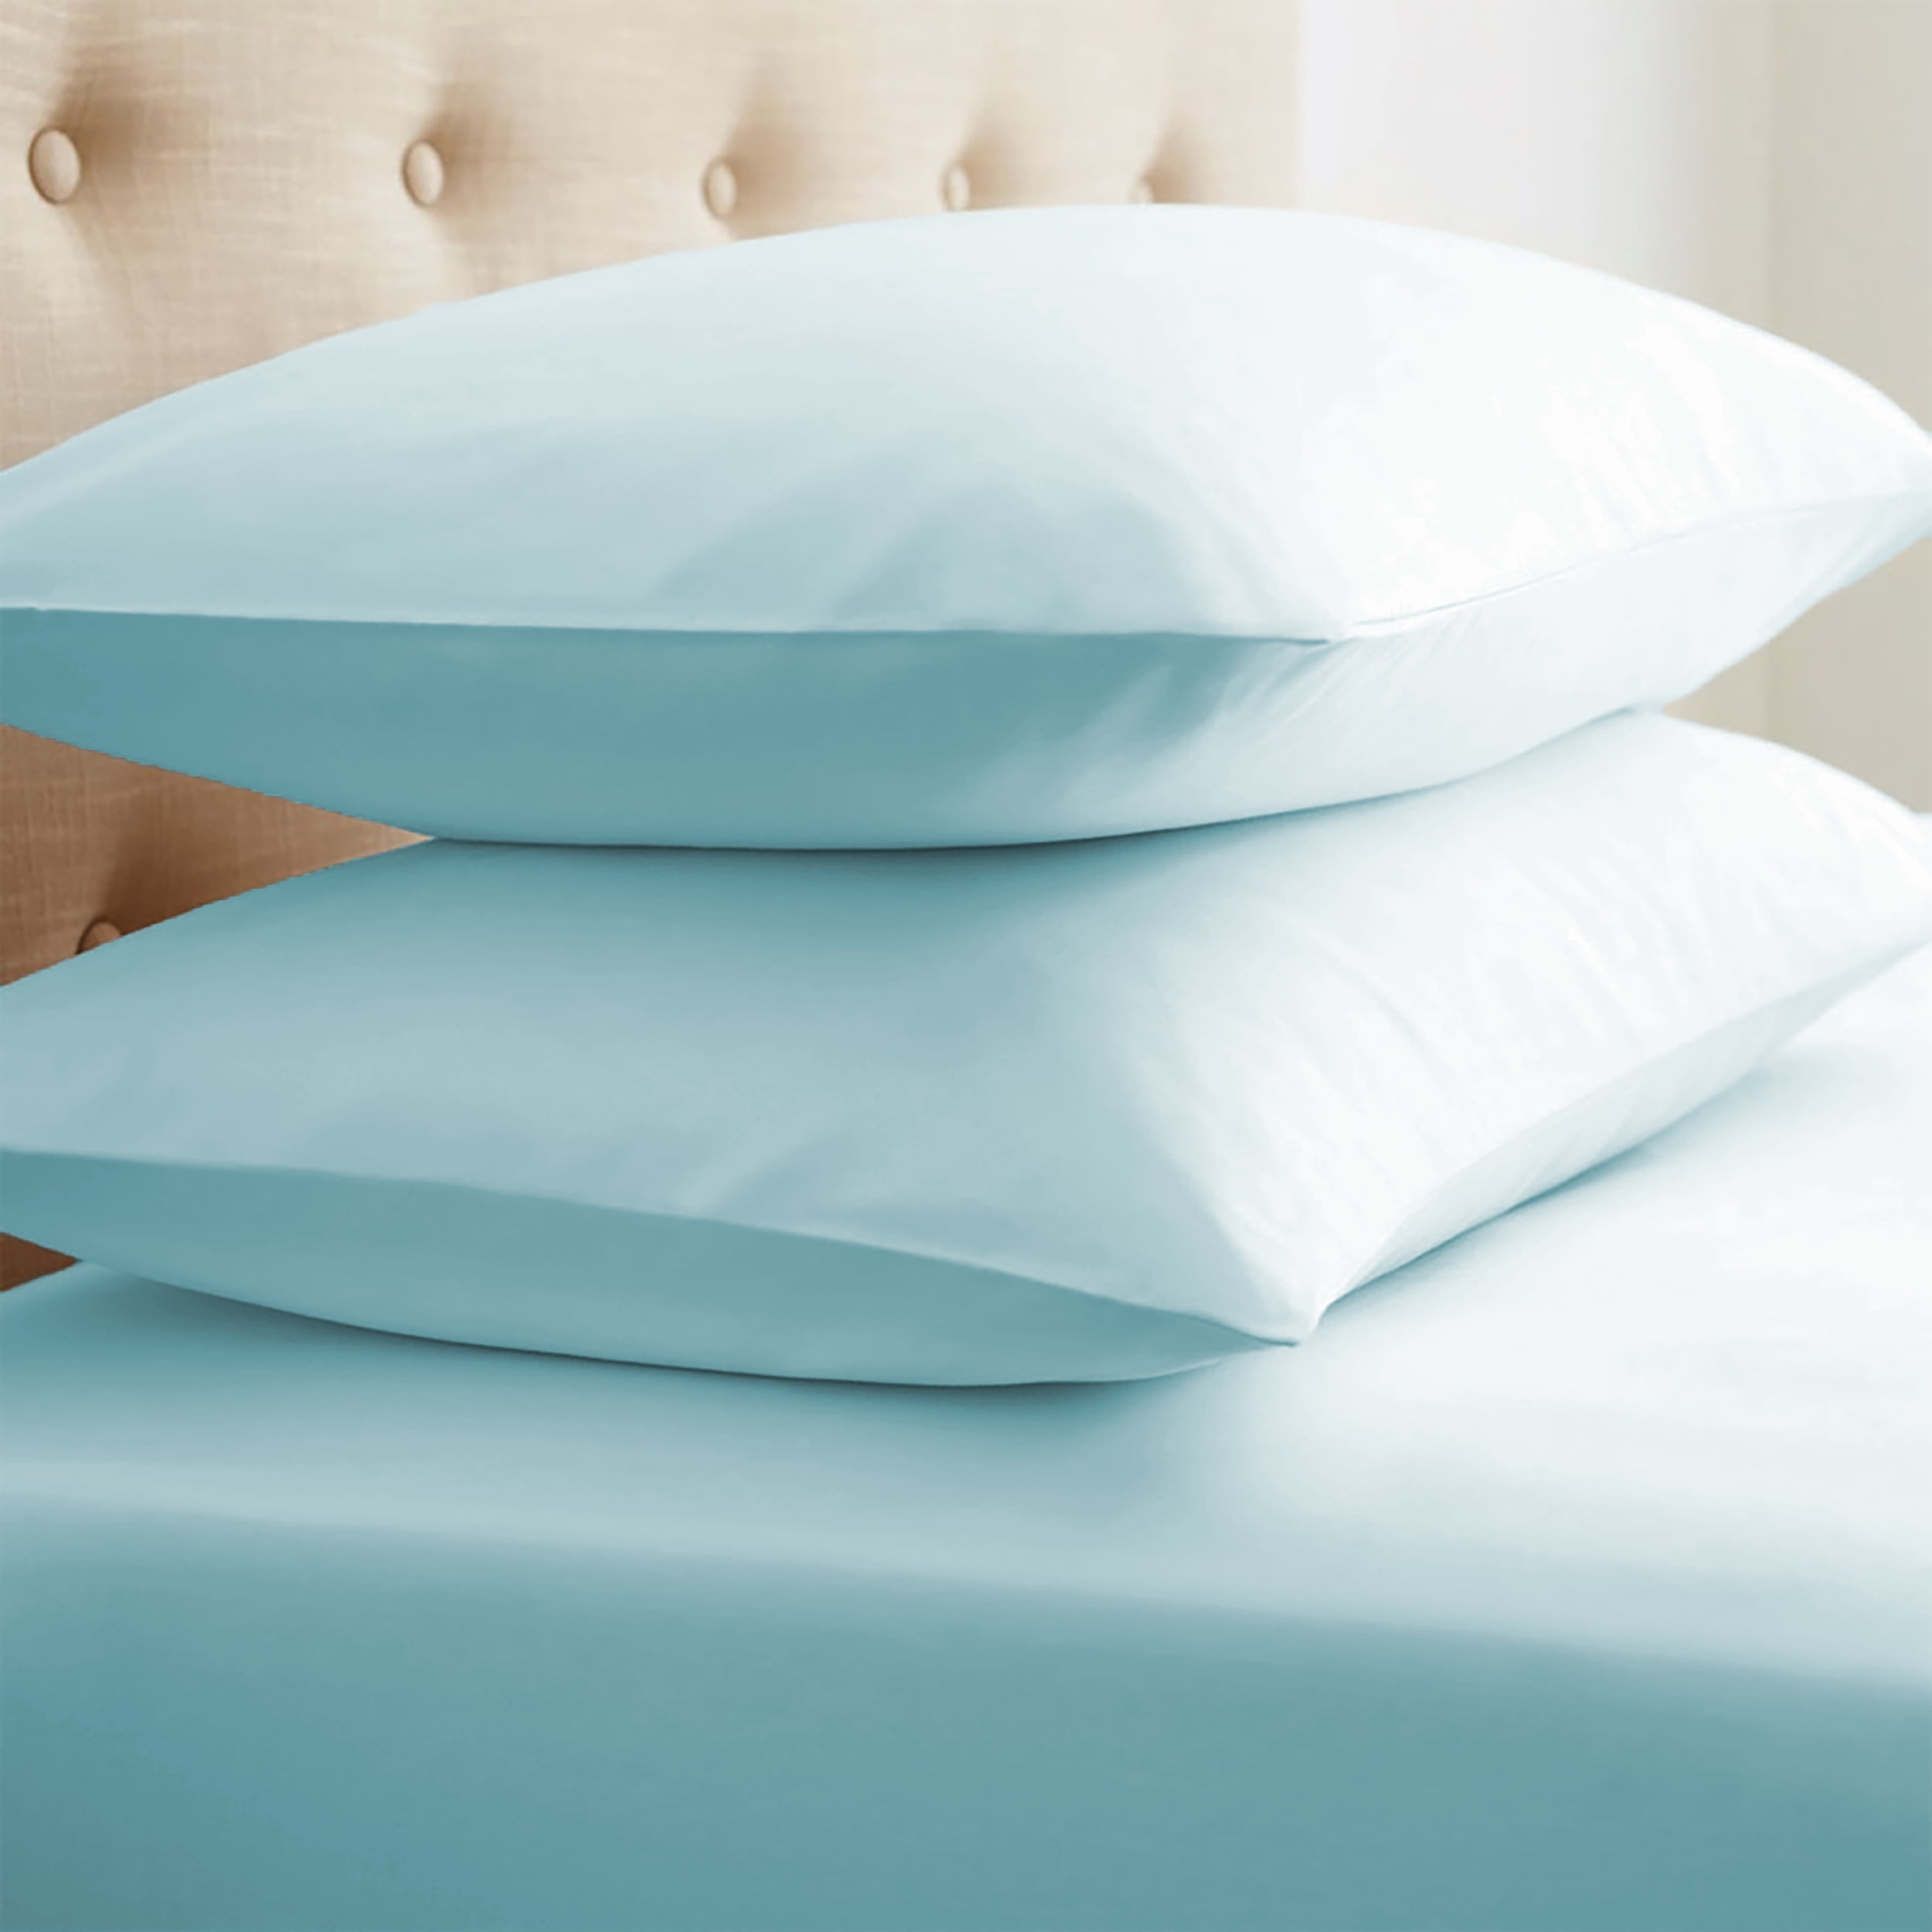 PVC Waterproof Bed Sheets Full Size Flat Sheets 220cm*160cm Black